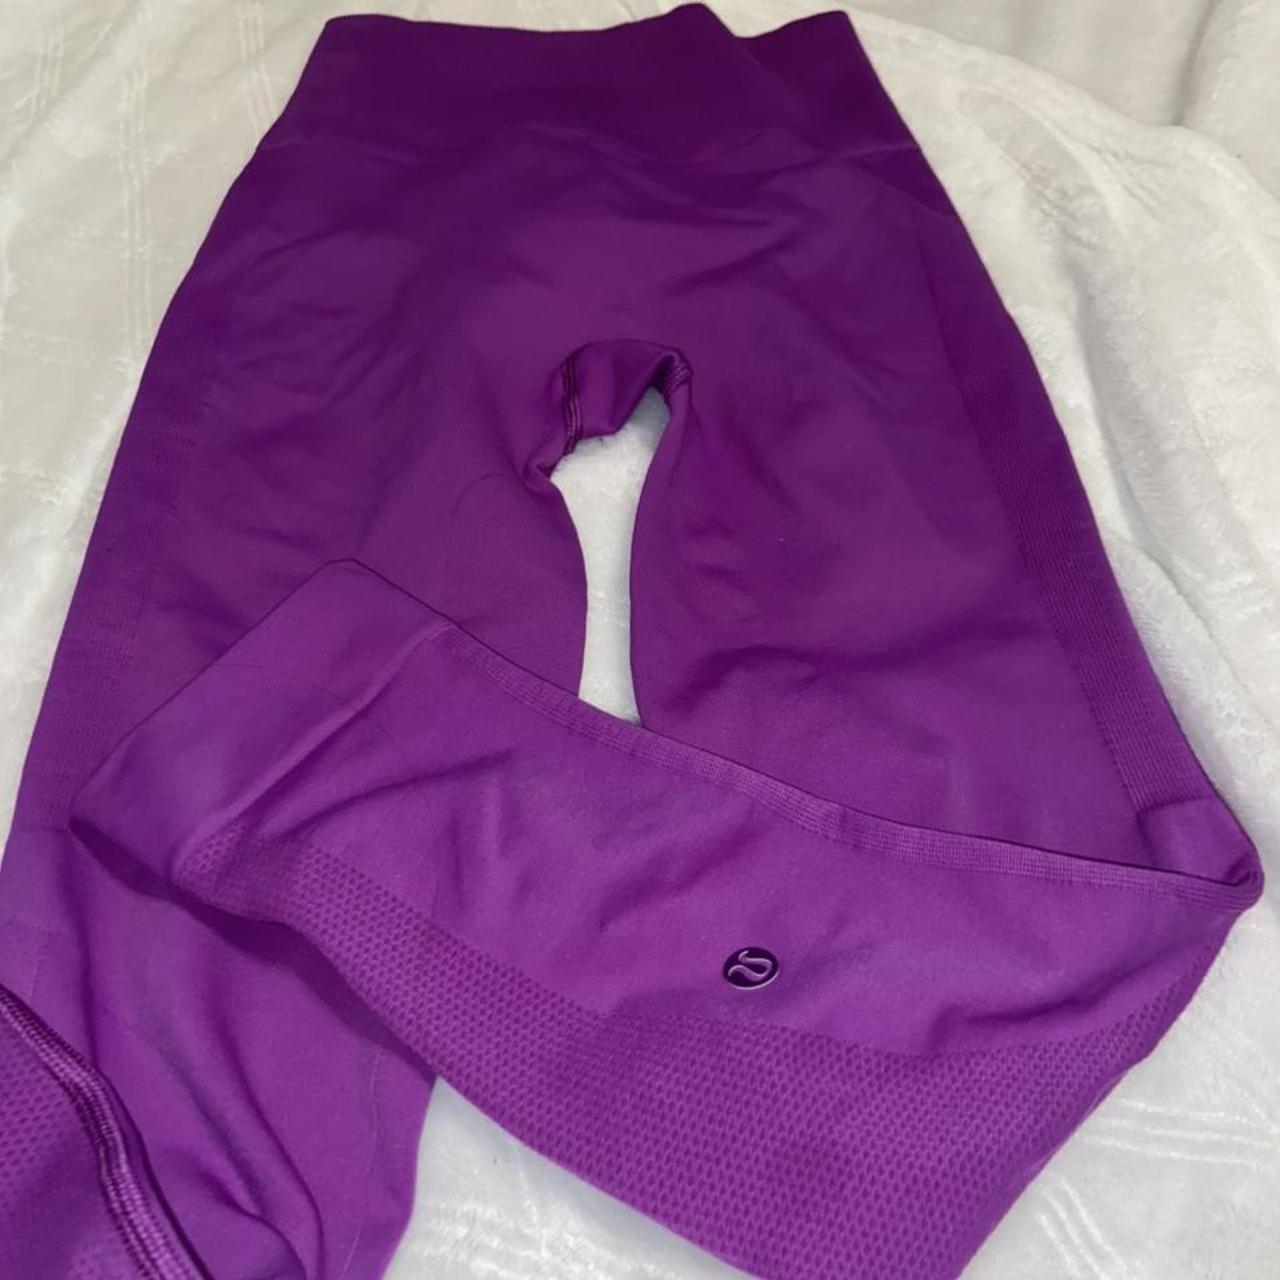 size 4 purple lululemon leggings - Depop